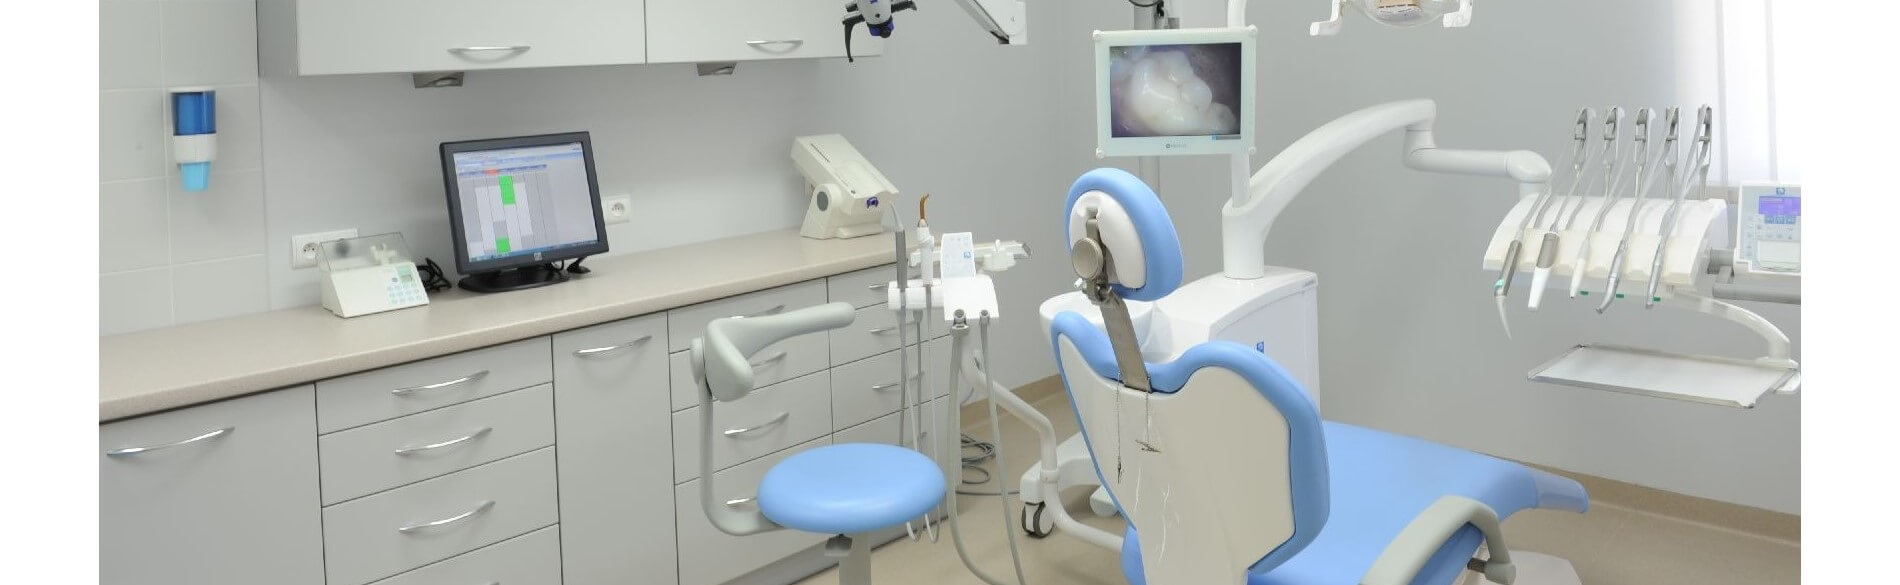 Hawkesbury Dentist providing Dental Services